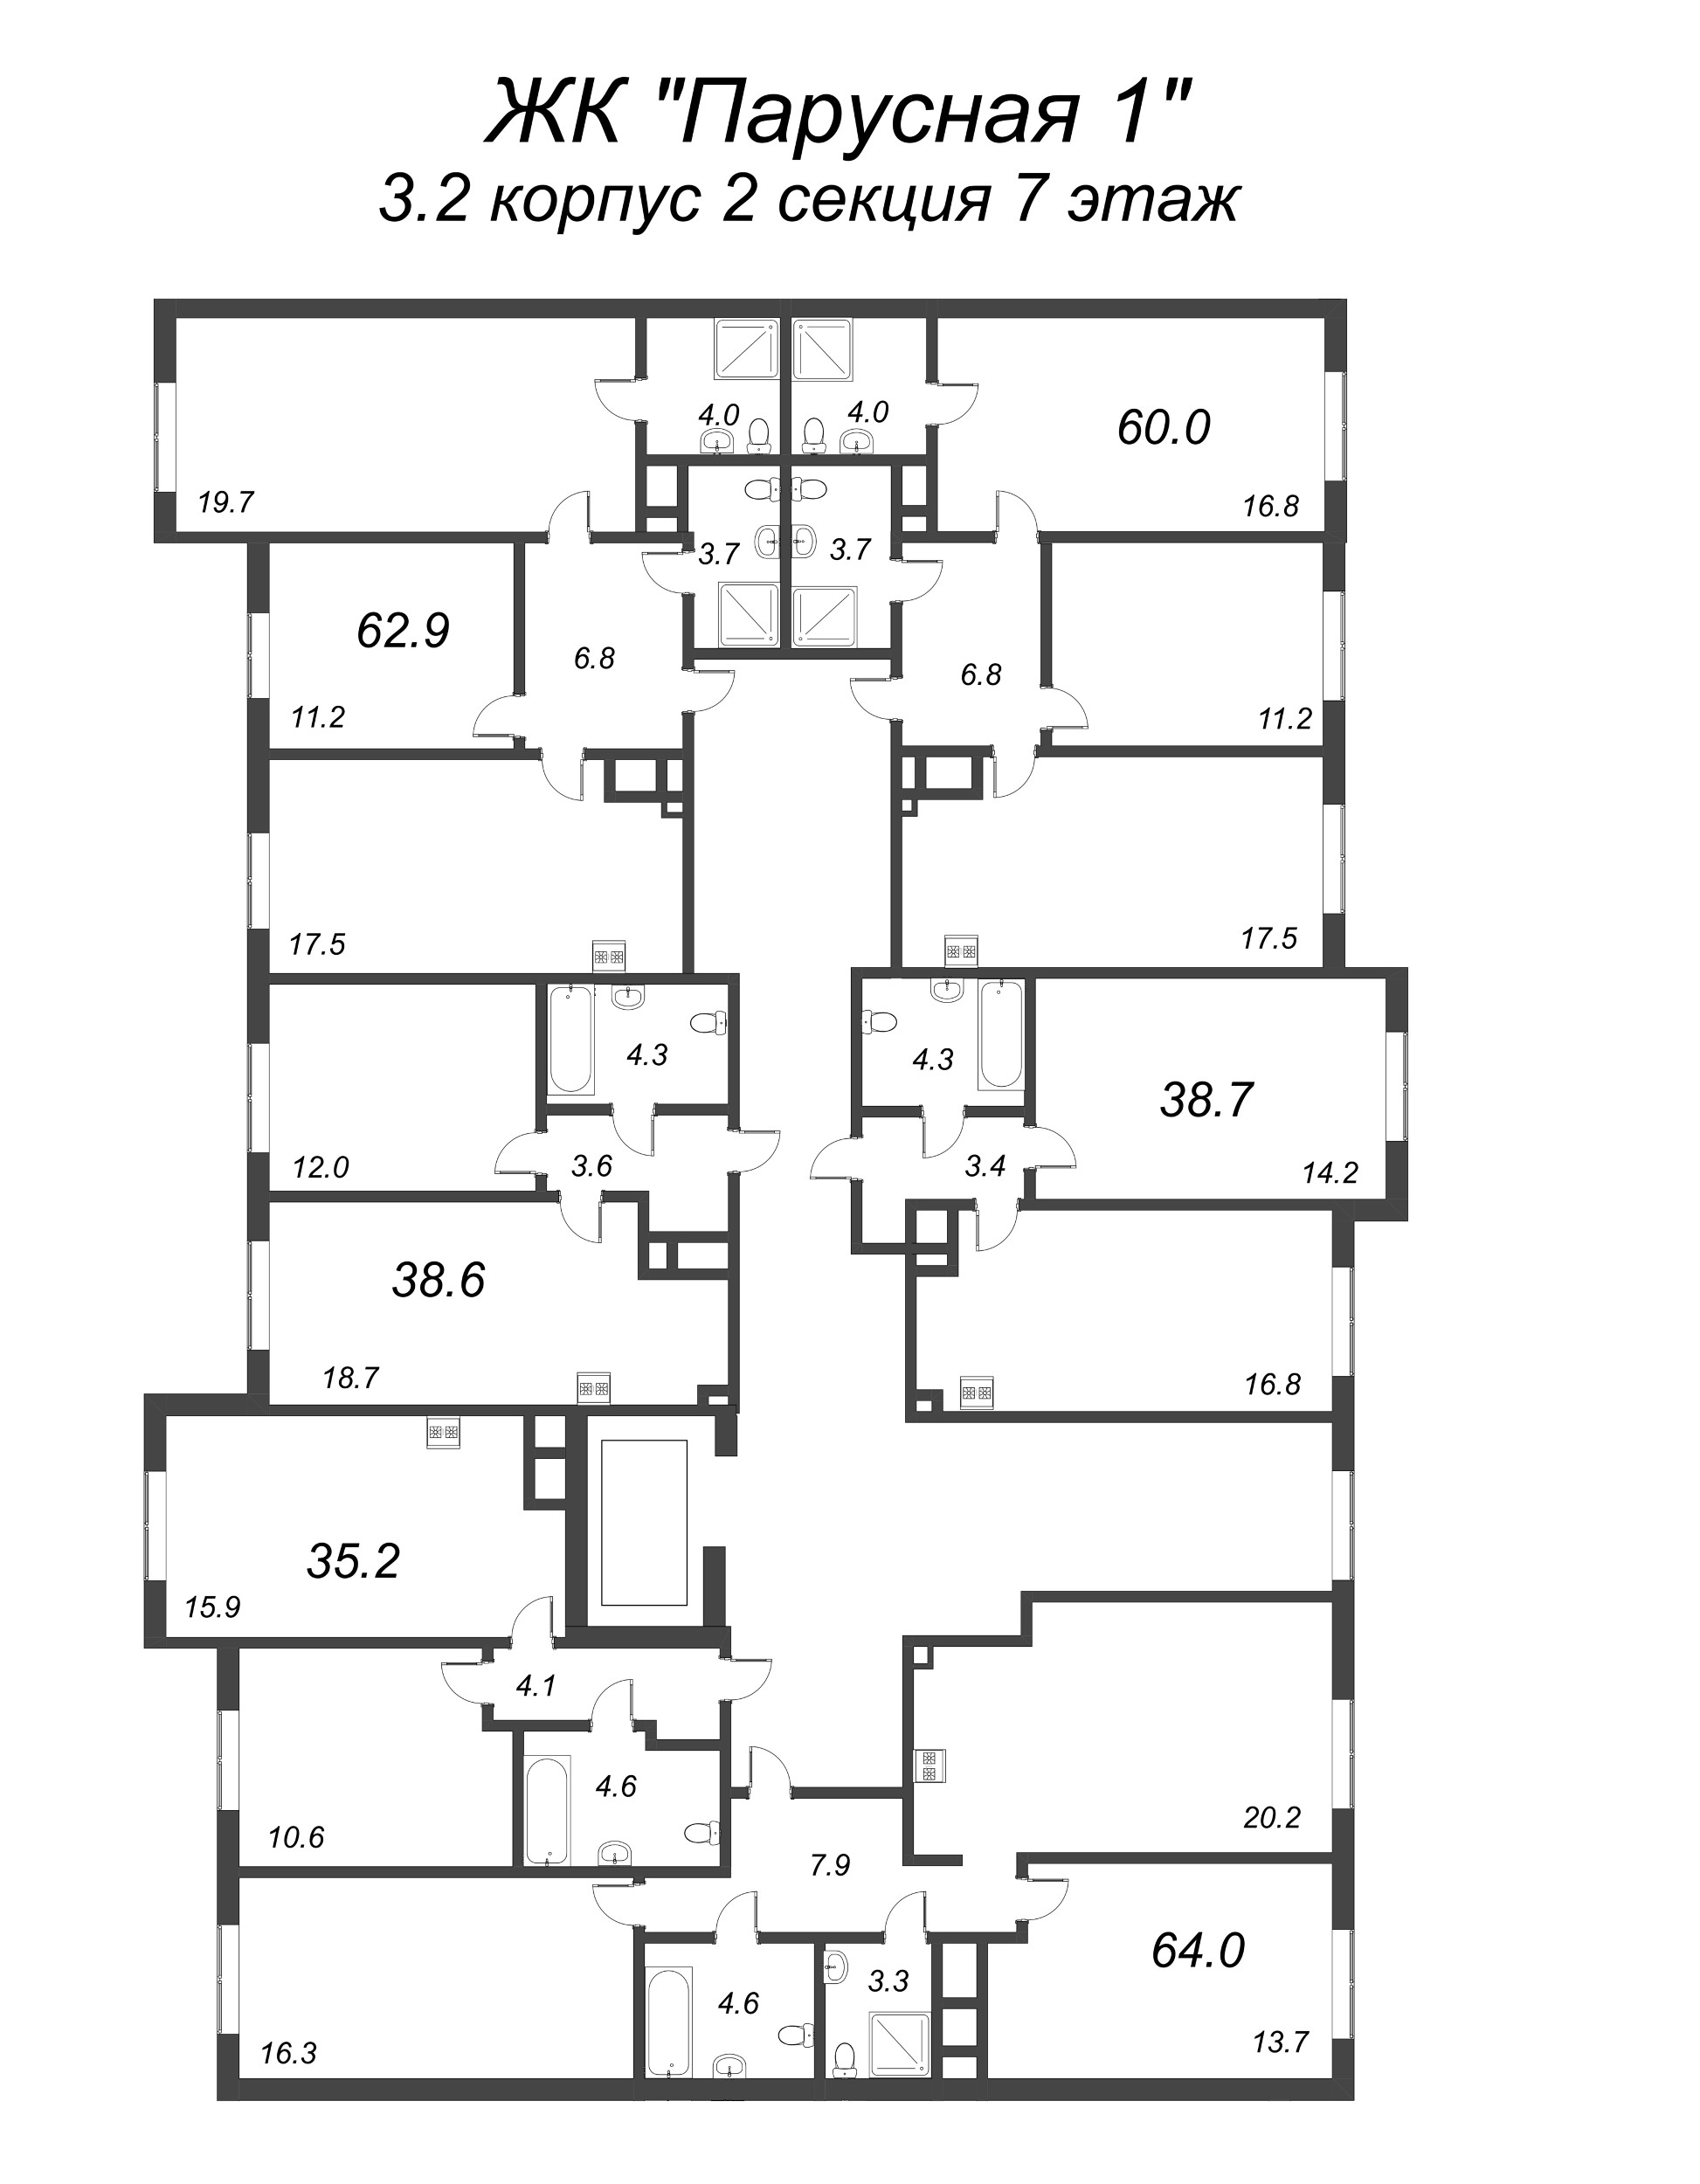 3-комнатная (Евро) квартира, 60 м² - планировка этажа